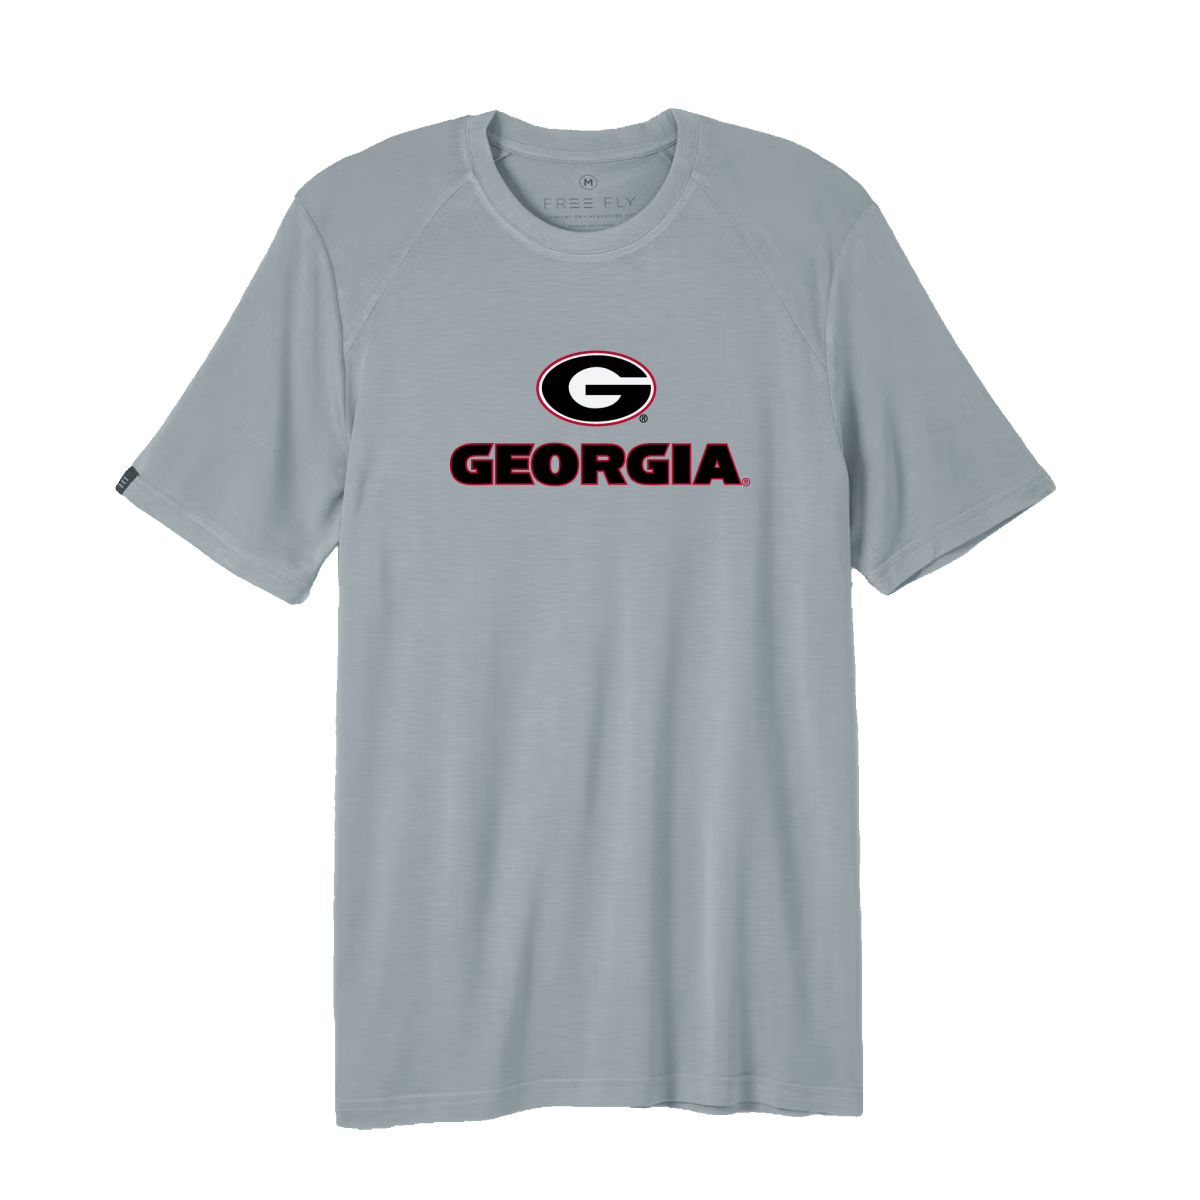 Georgia Men's Free Fly Bamboo Lightweight Short Sleeve - Shop B-Unlimited